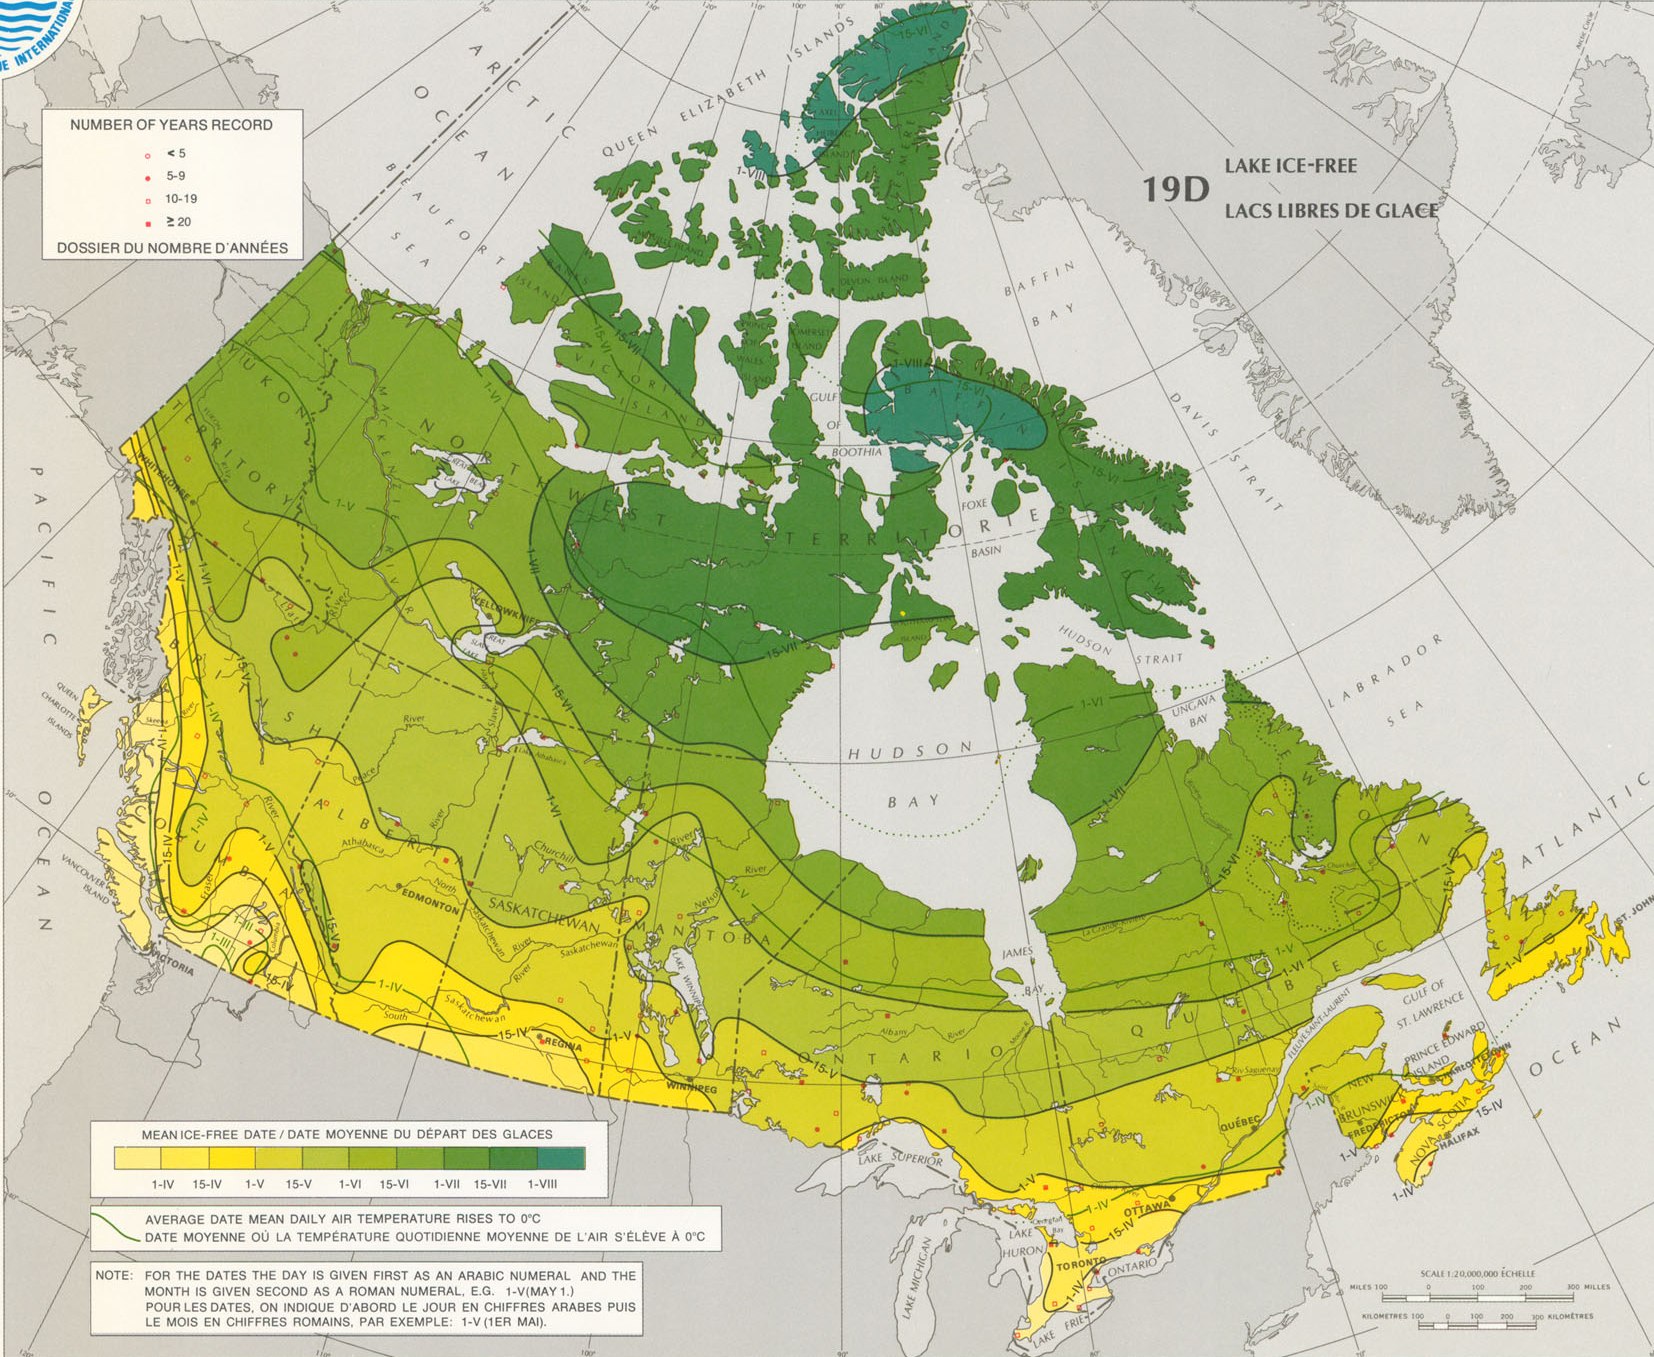 Природные зоны страны канада. Температурная карта Канады. Климат Канады карта. Климатическая карта Канады. Климатическая ката Канады.